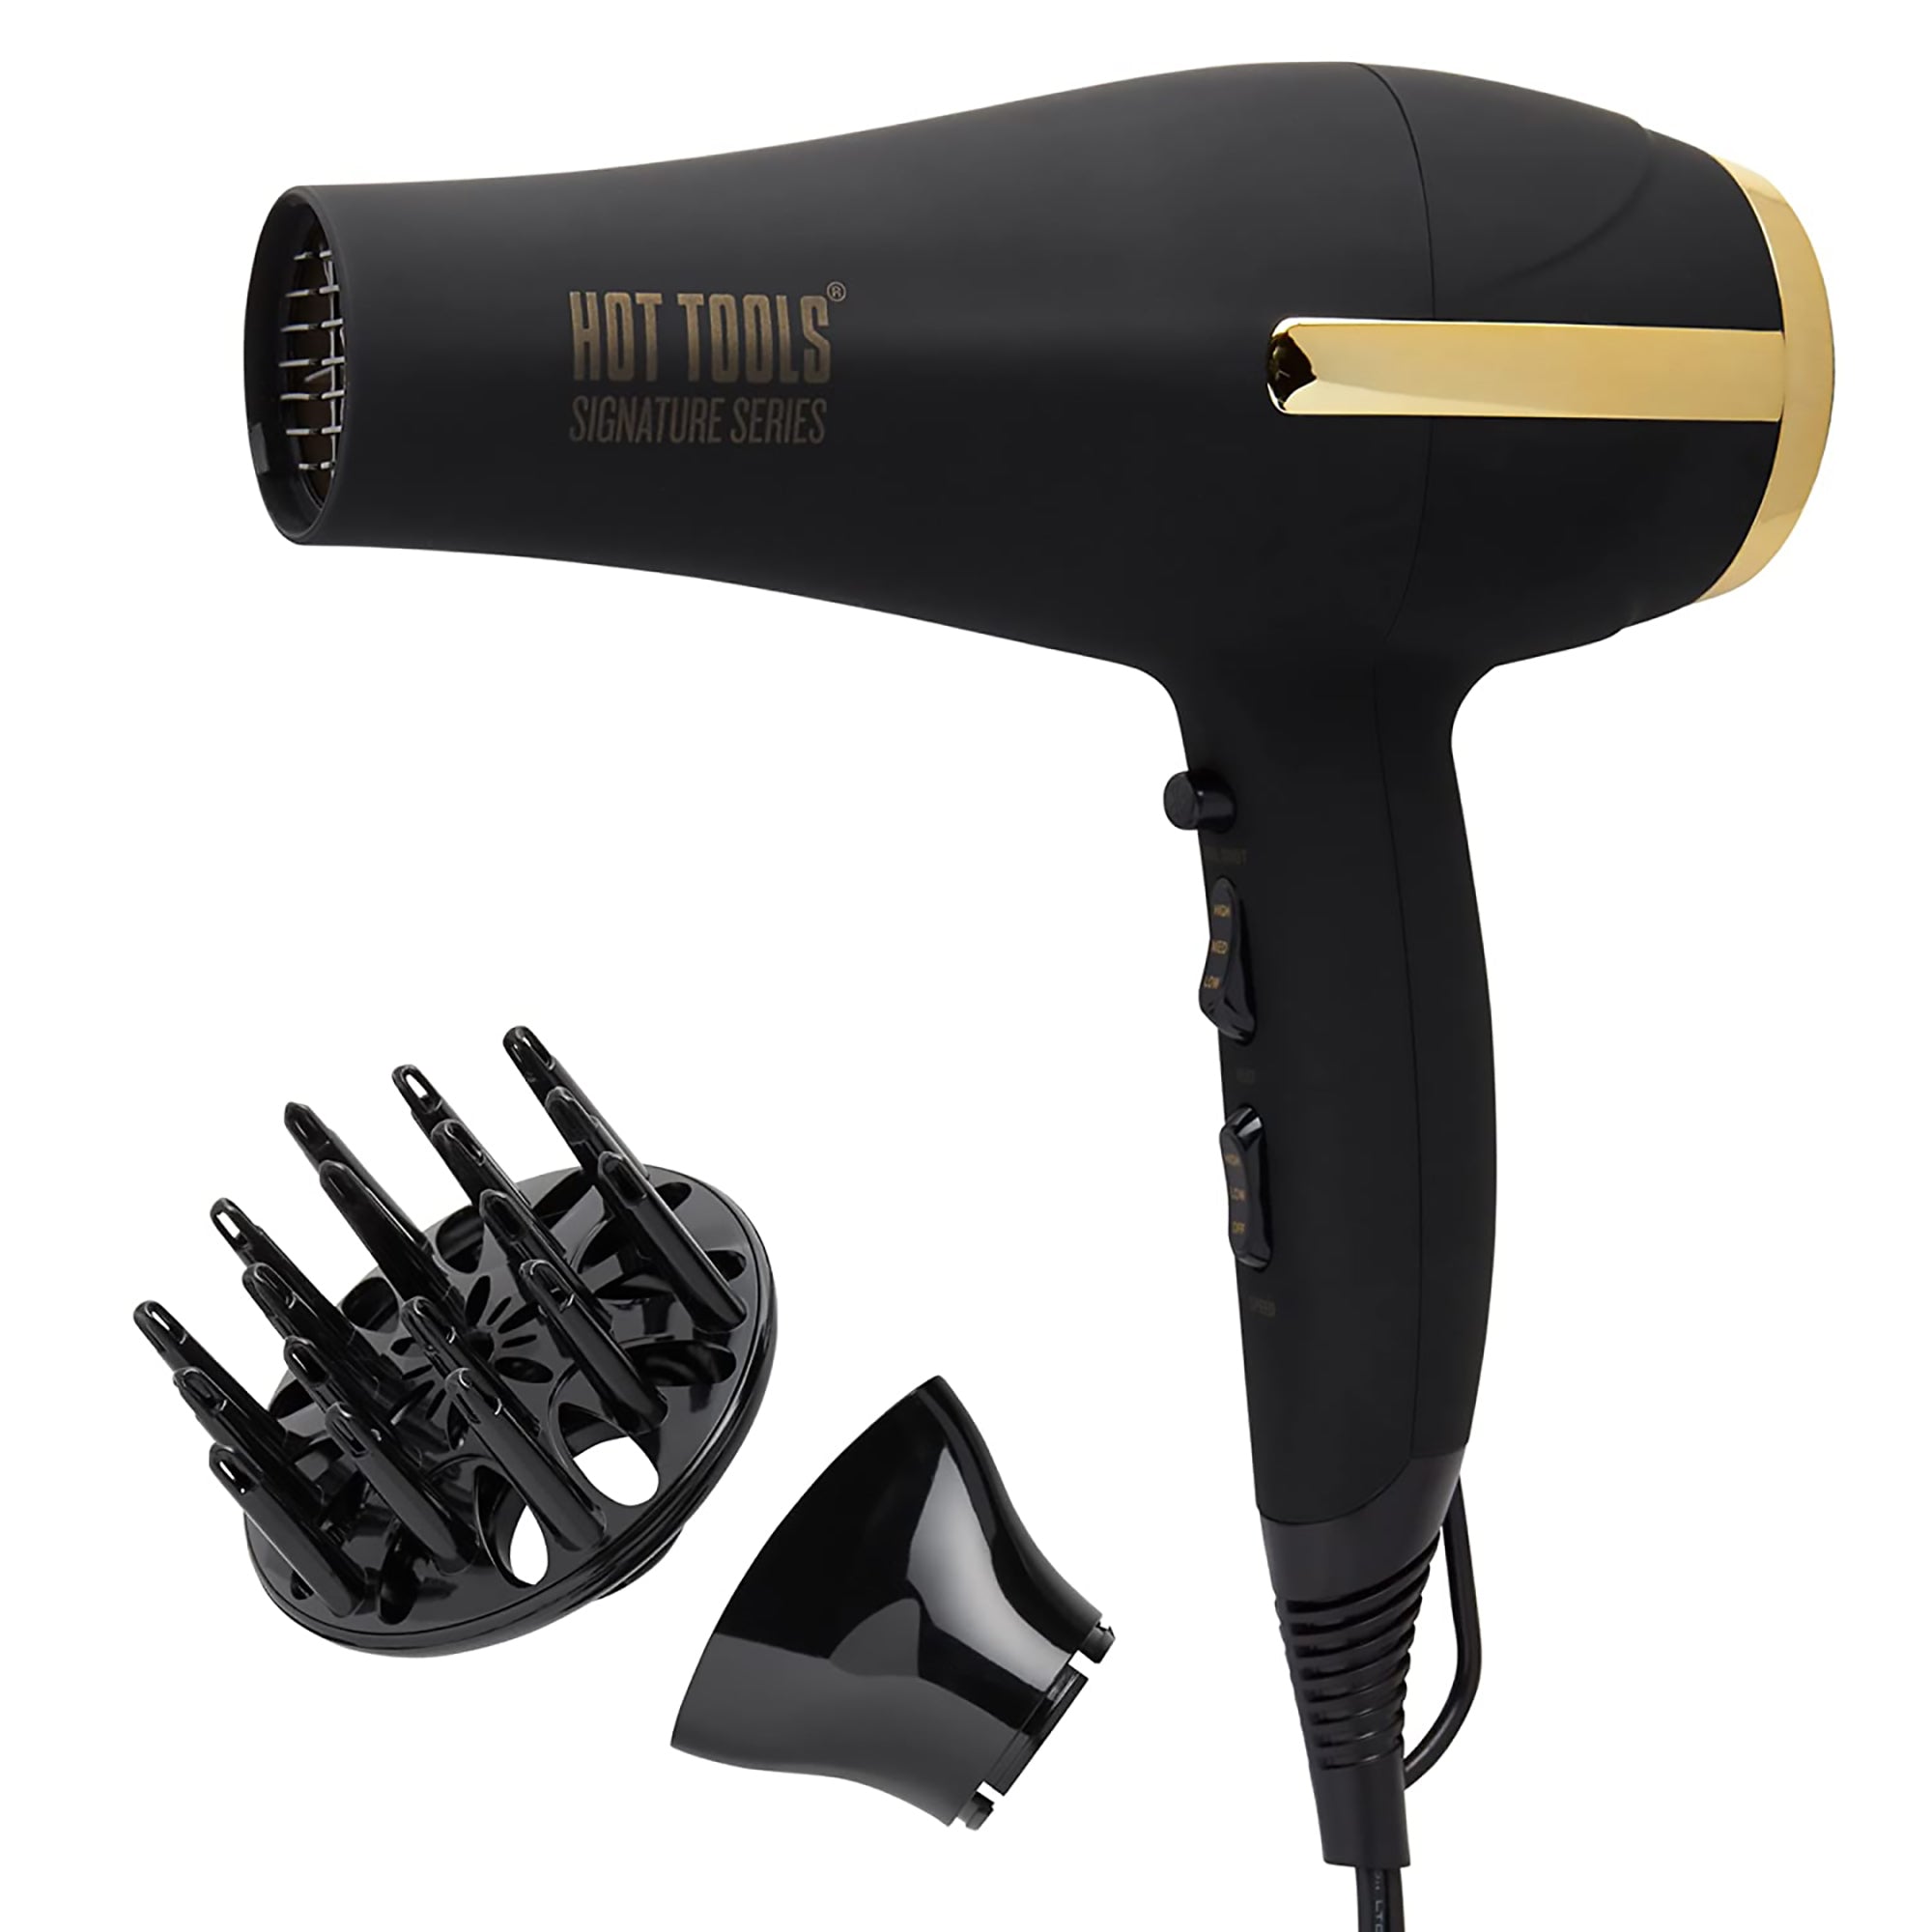 Hot Tools Signature Series Ionic Ceramic Salon Hair Dryer - Black / BLACK HTDR5580